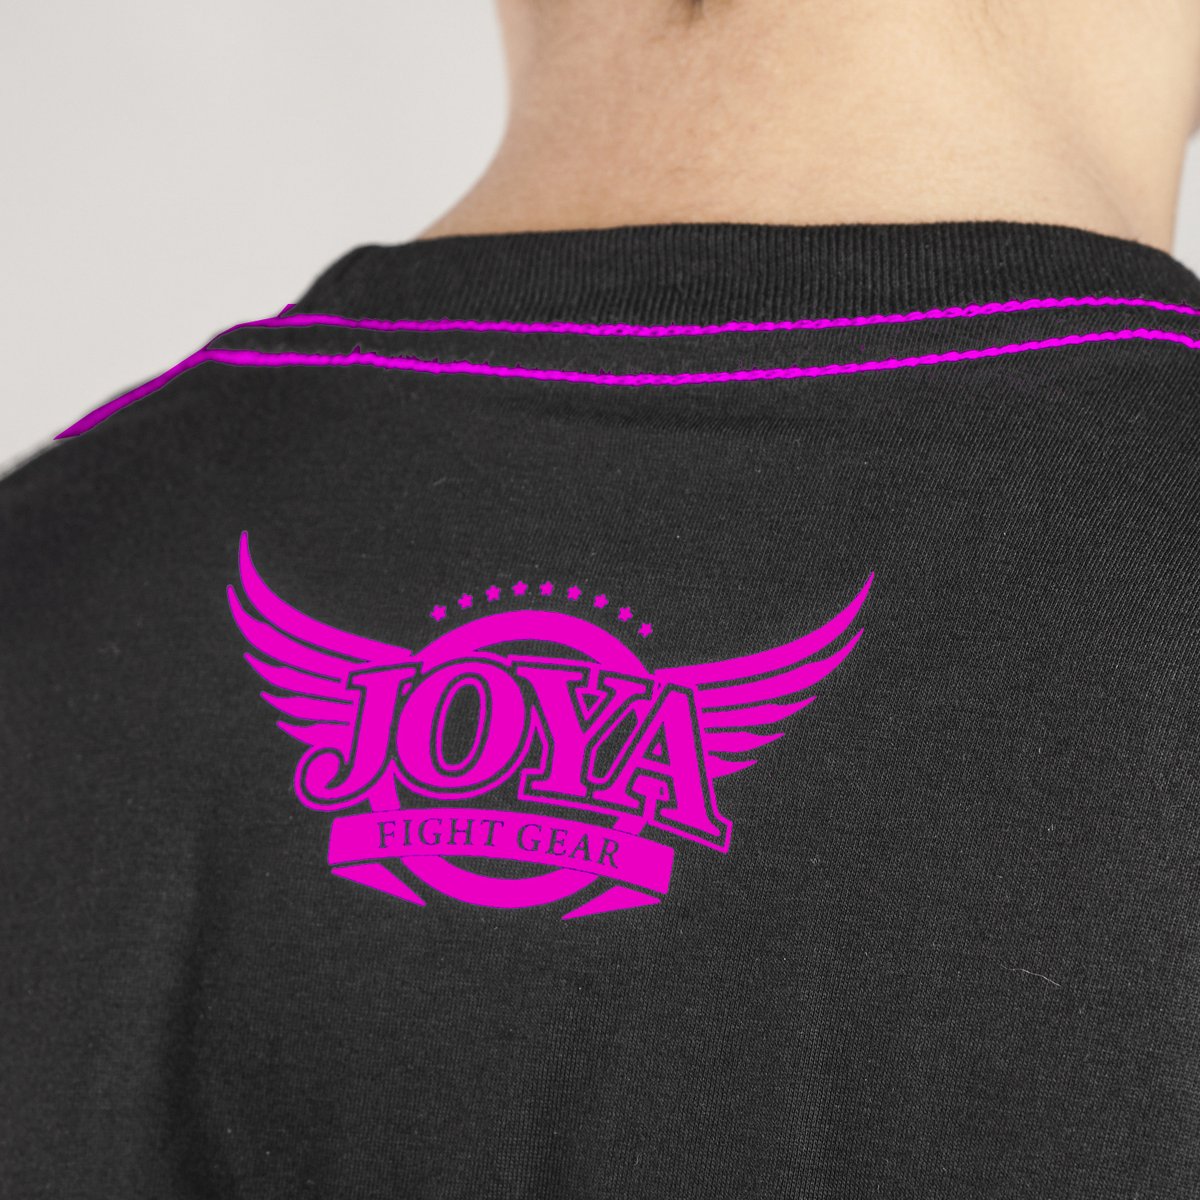 Joya T-Shirt Pink Dragon 152